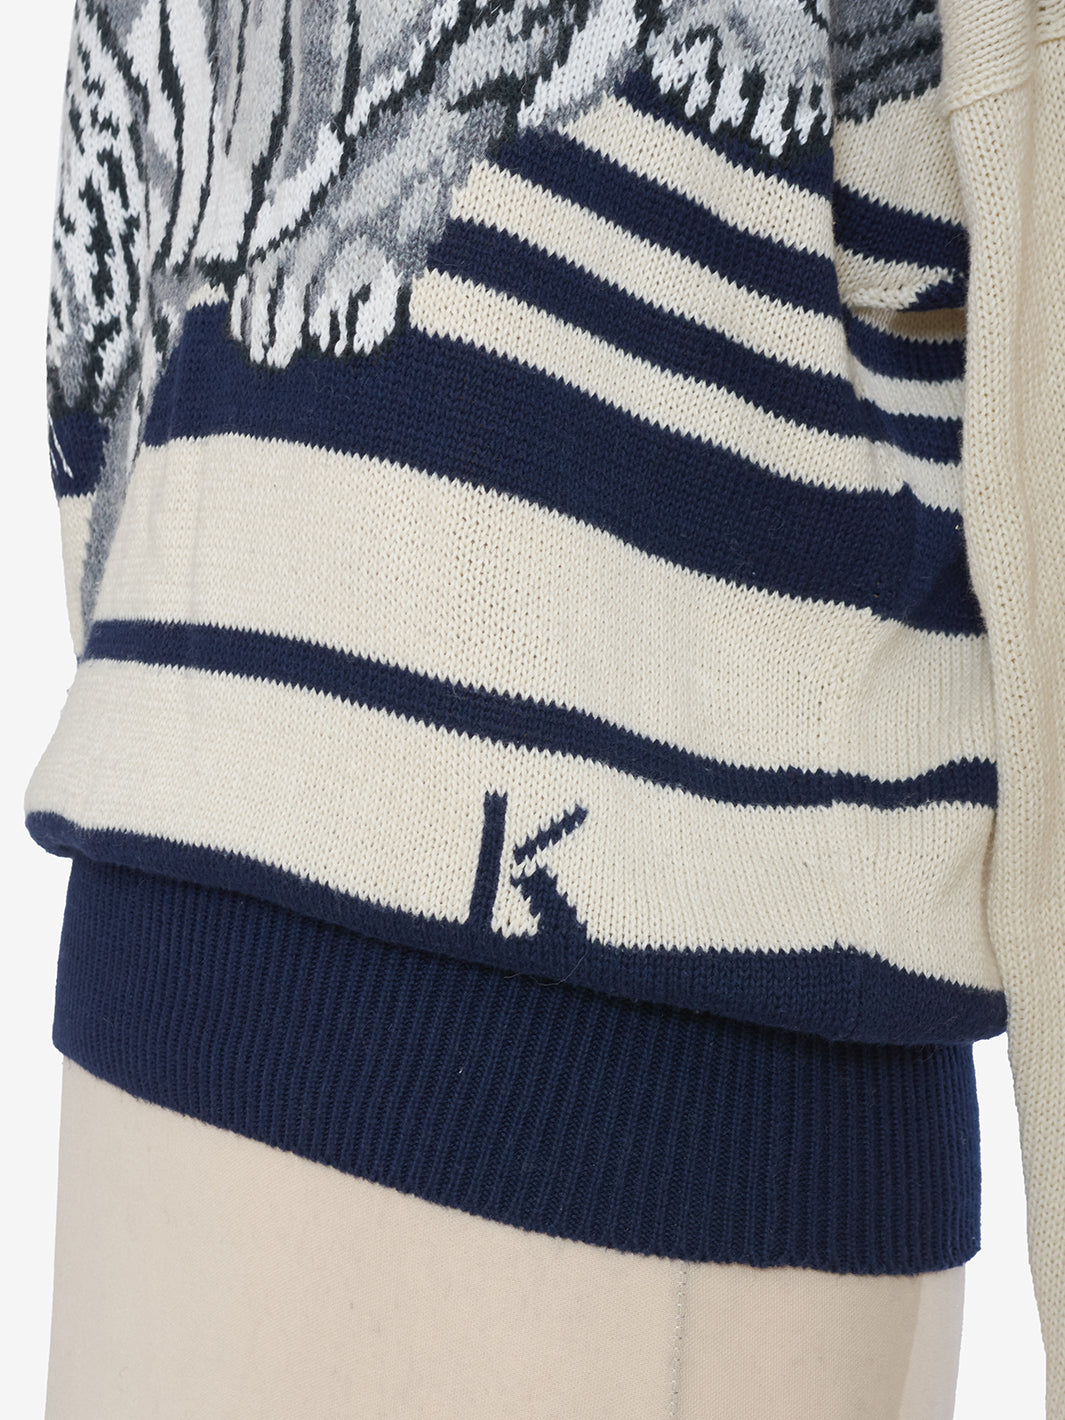 Krizia Tiger Embroidery Sweater